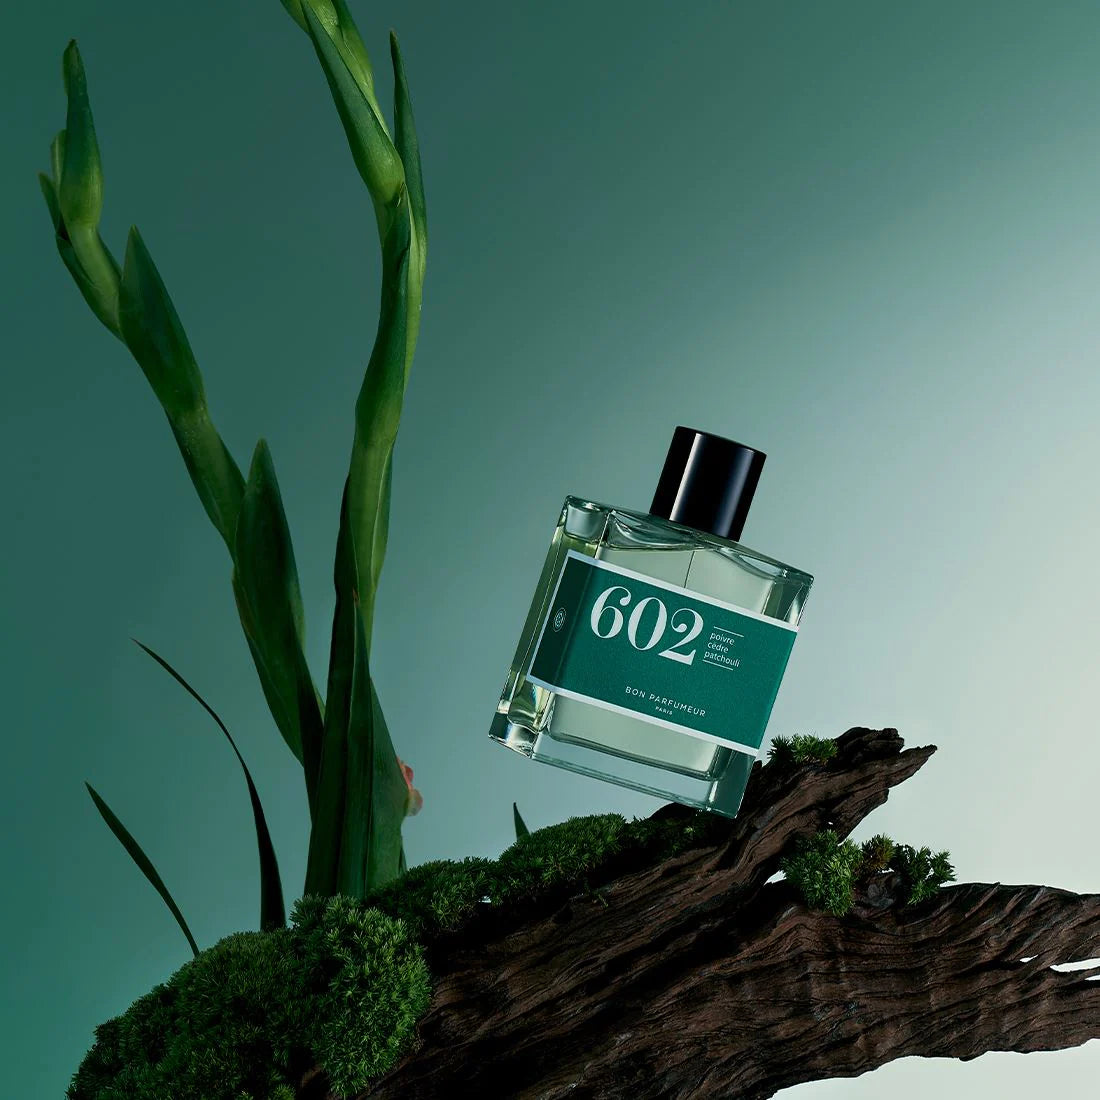 Perfume - Bon Parfumeur - 602